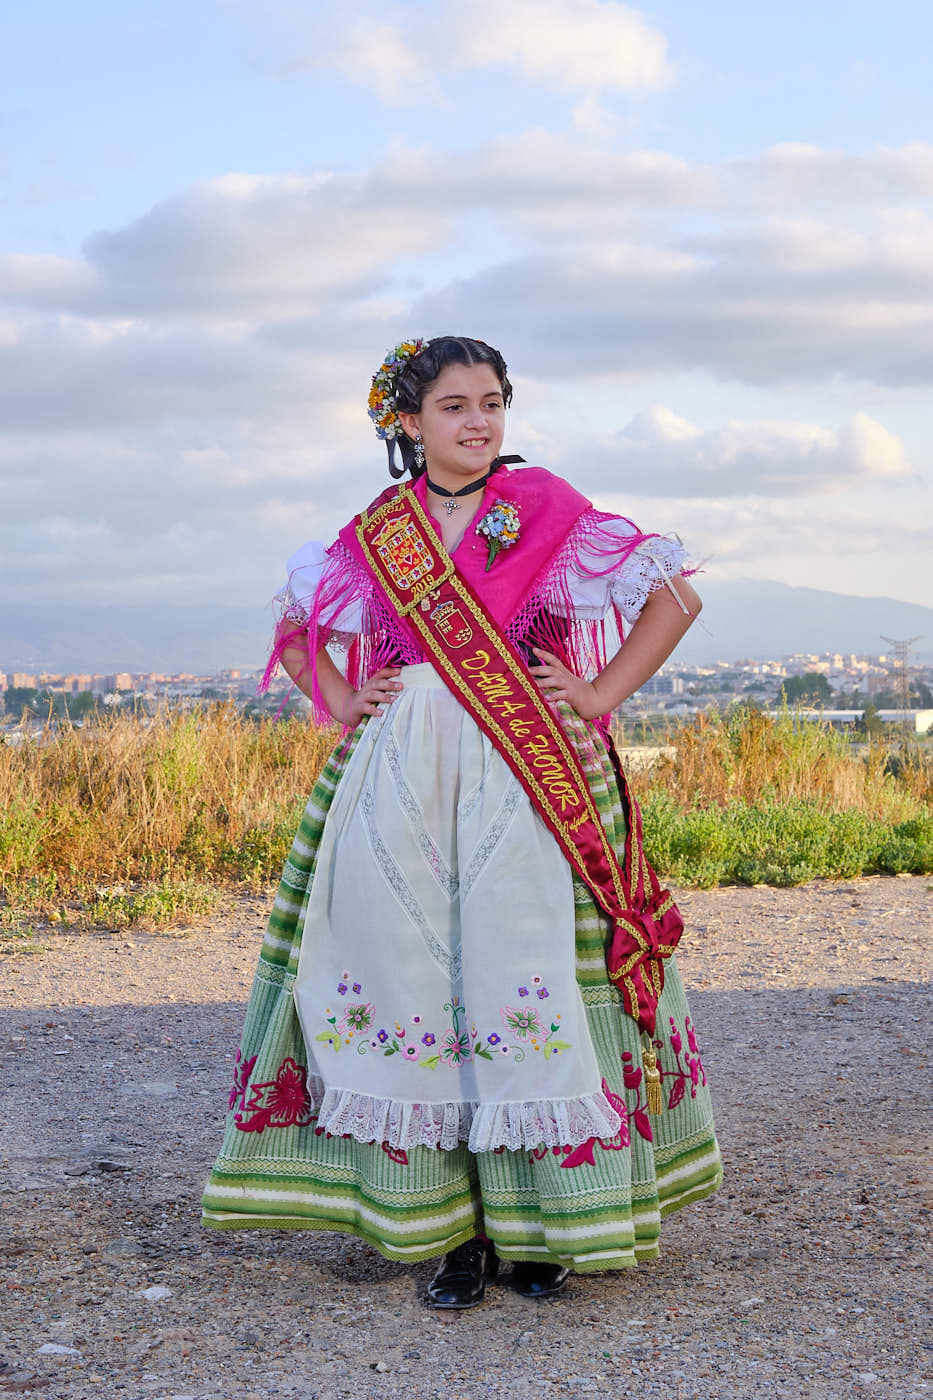 Foto de niña dama de la huerta infantil con traje regional murciano